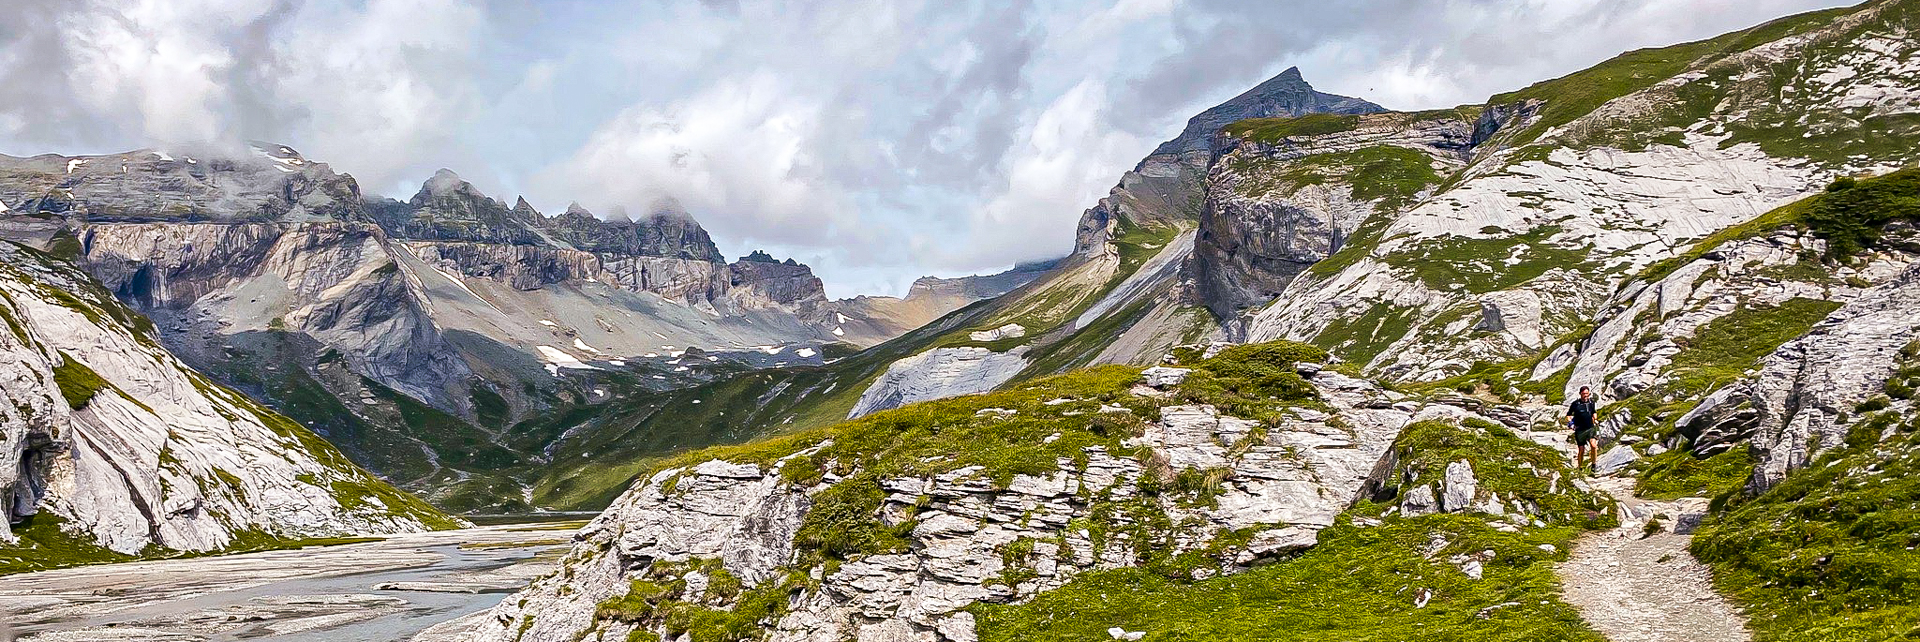 Switzerland – Sardona & the origin of the Alps